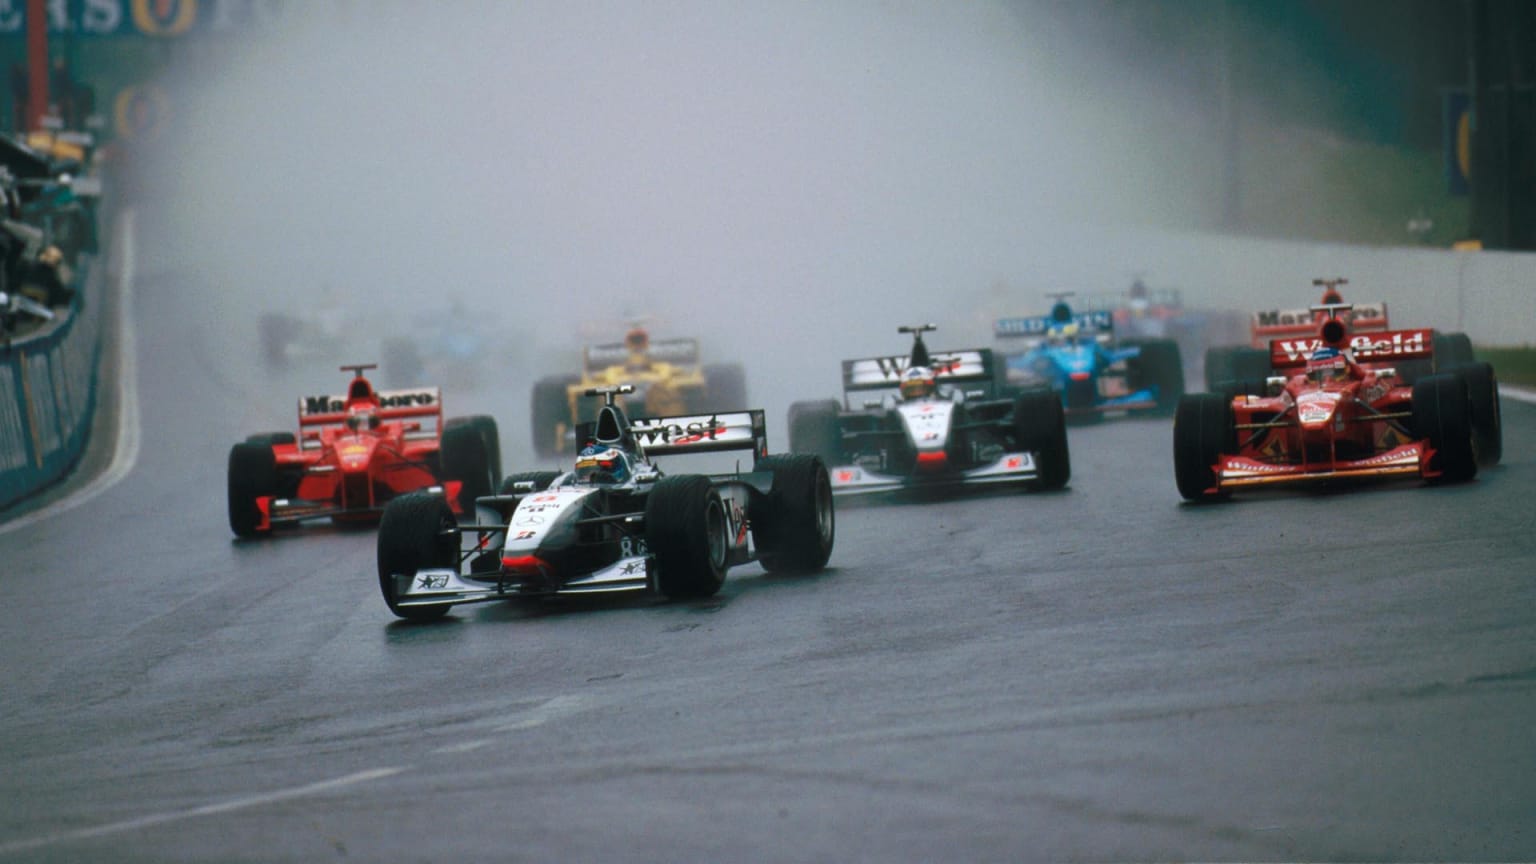 In numbers - the Belgian Grand Prix